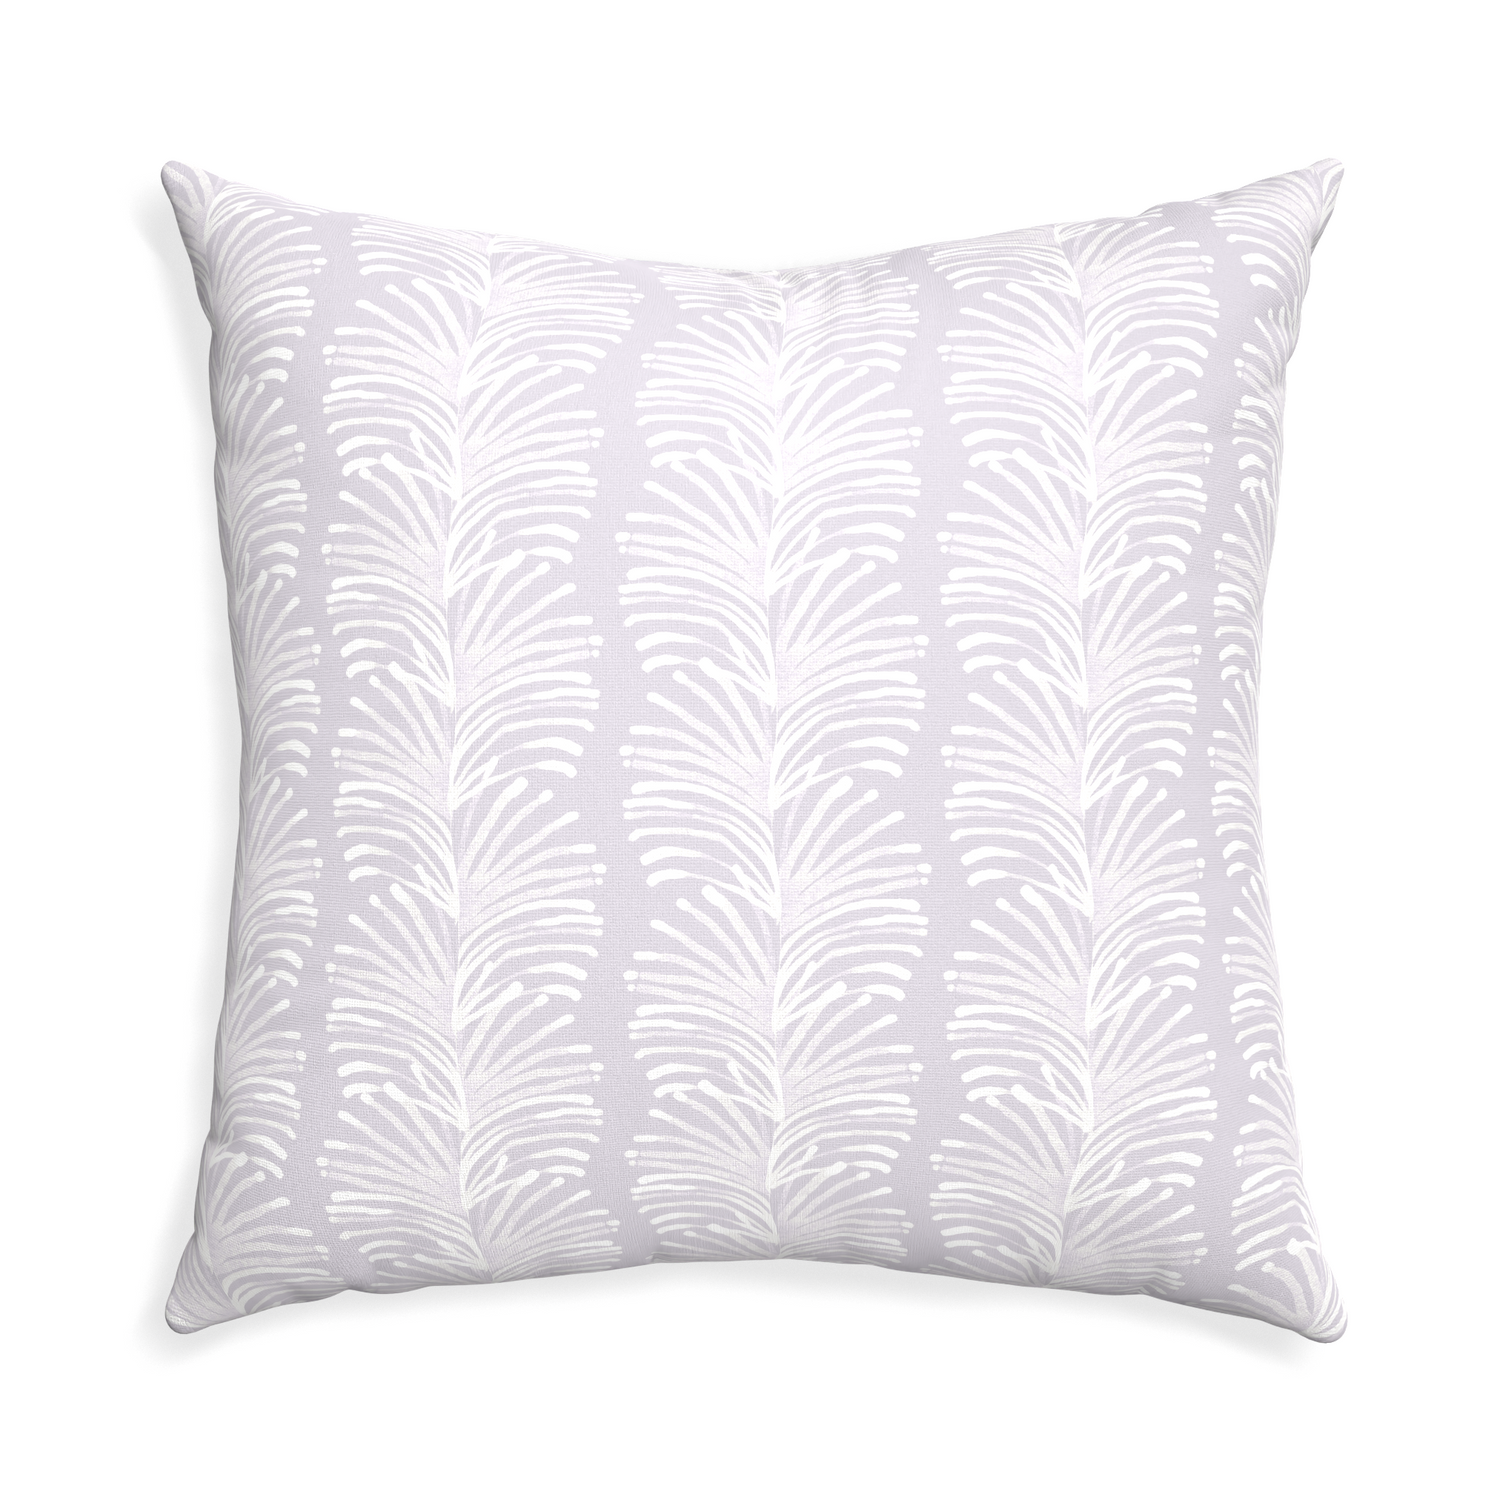 Euro-sham emma lavender custom pillow with none on white background